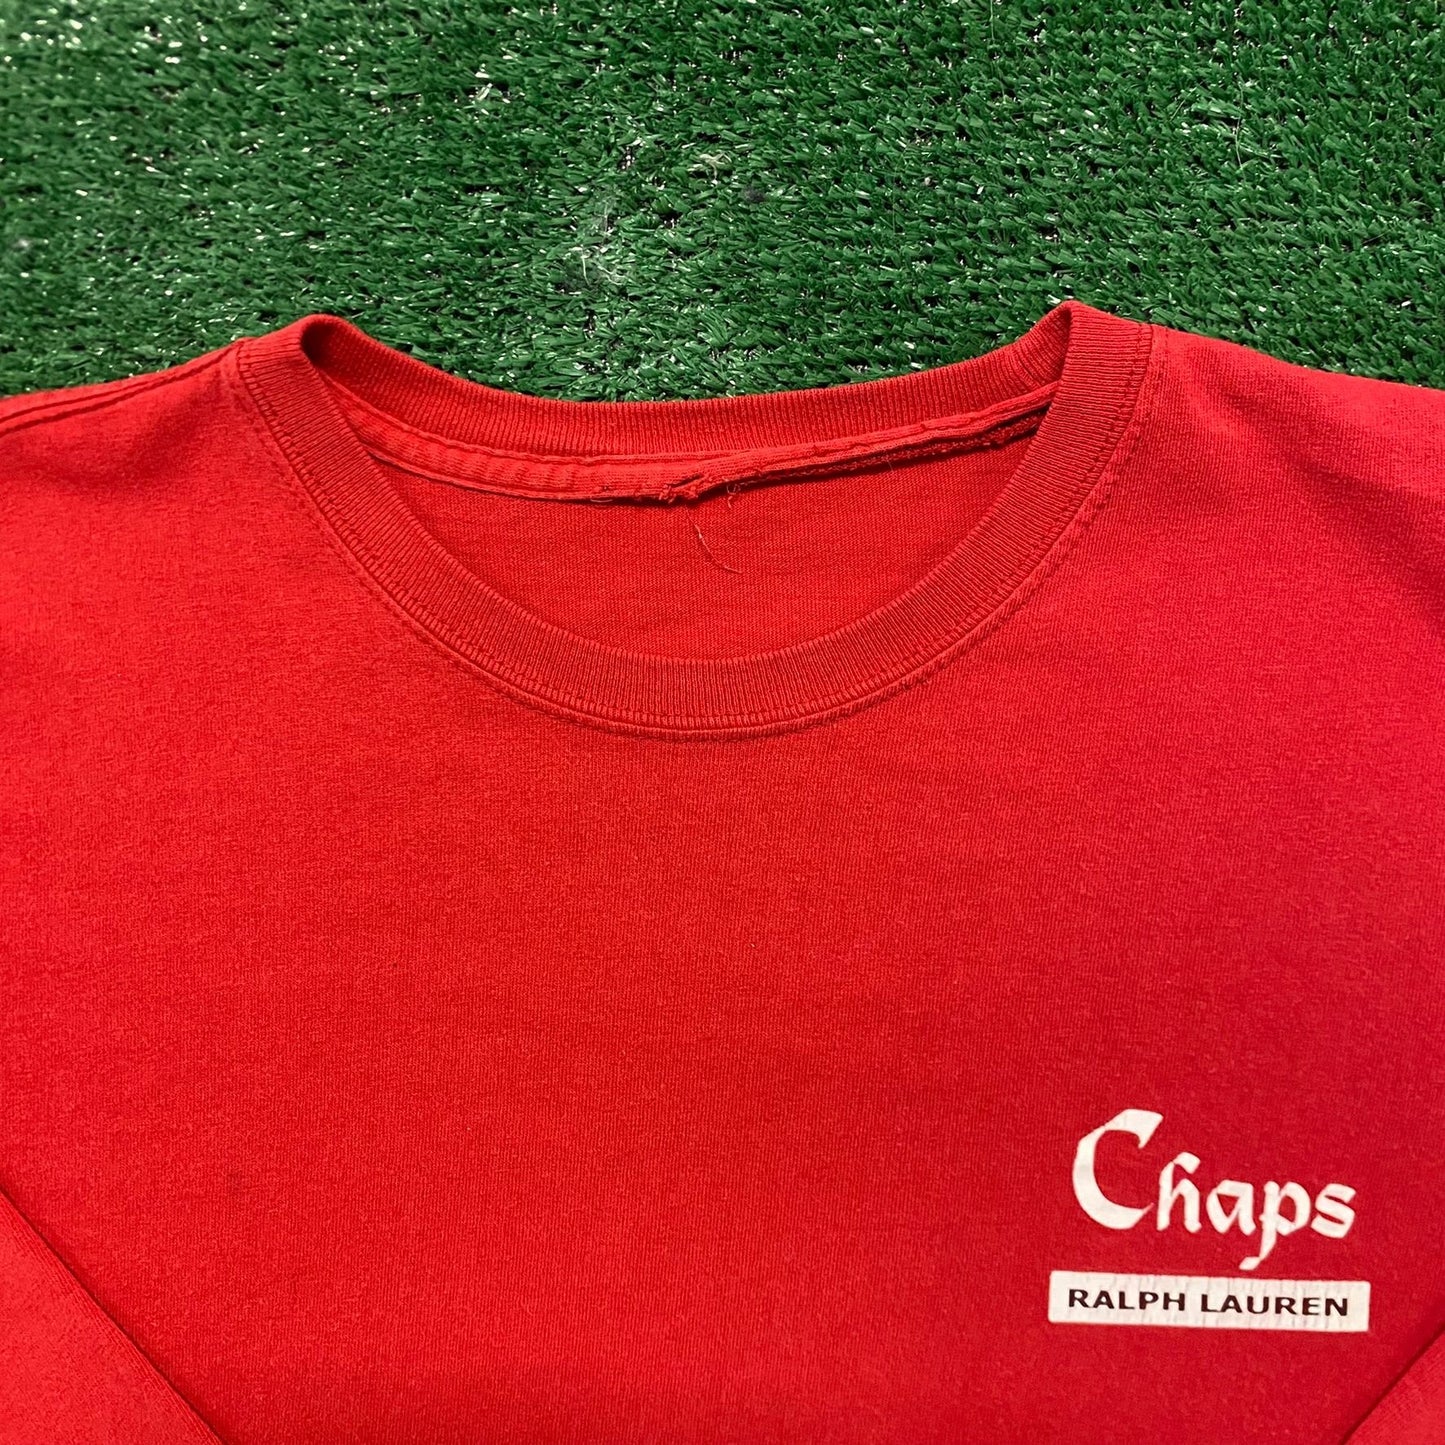 Chaps Ralph Lauren Skiing Vintage 90s Long Sleeve T-Shirt